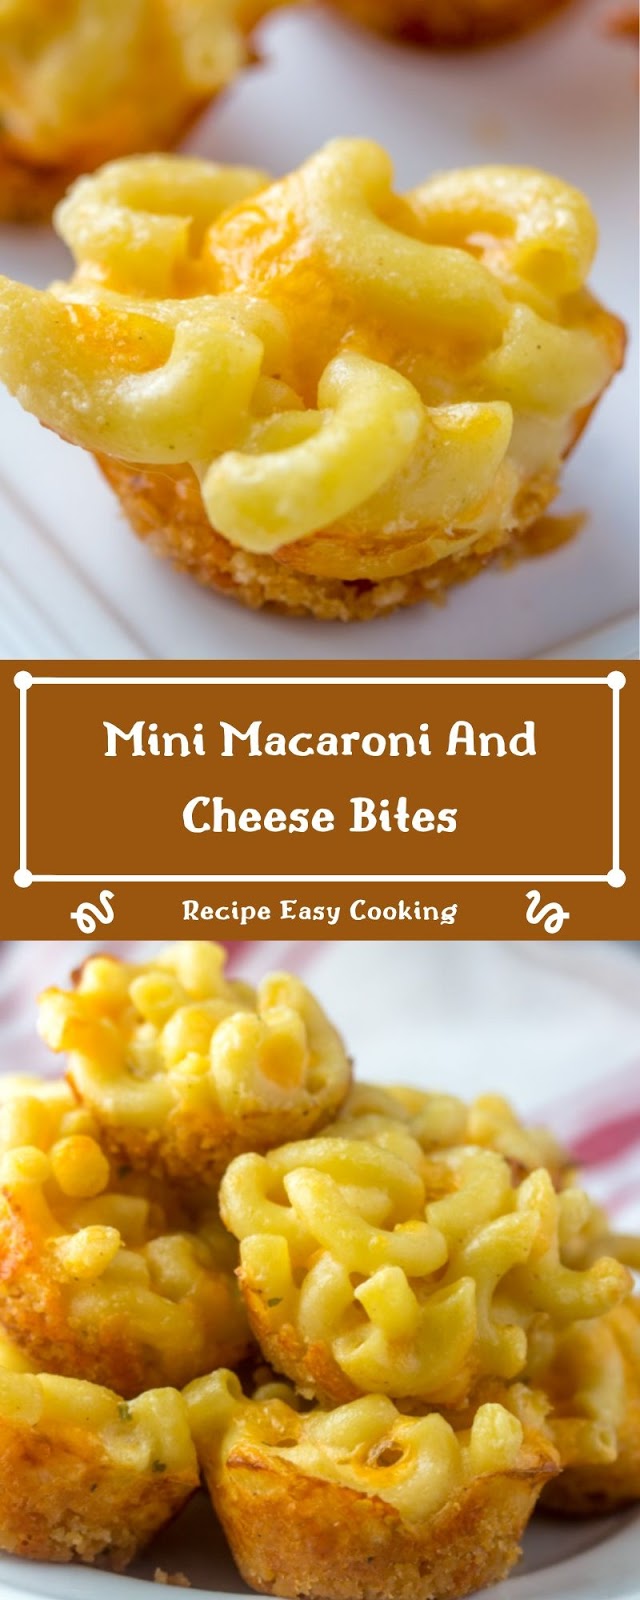 Mini Macaroni And Cheese Bites